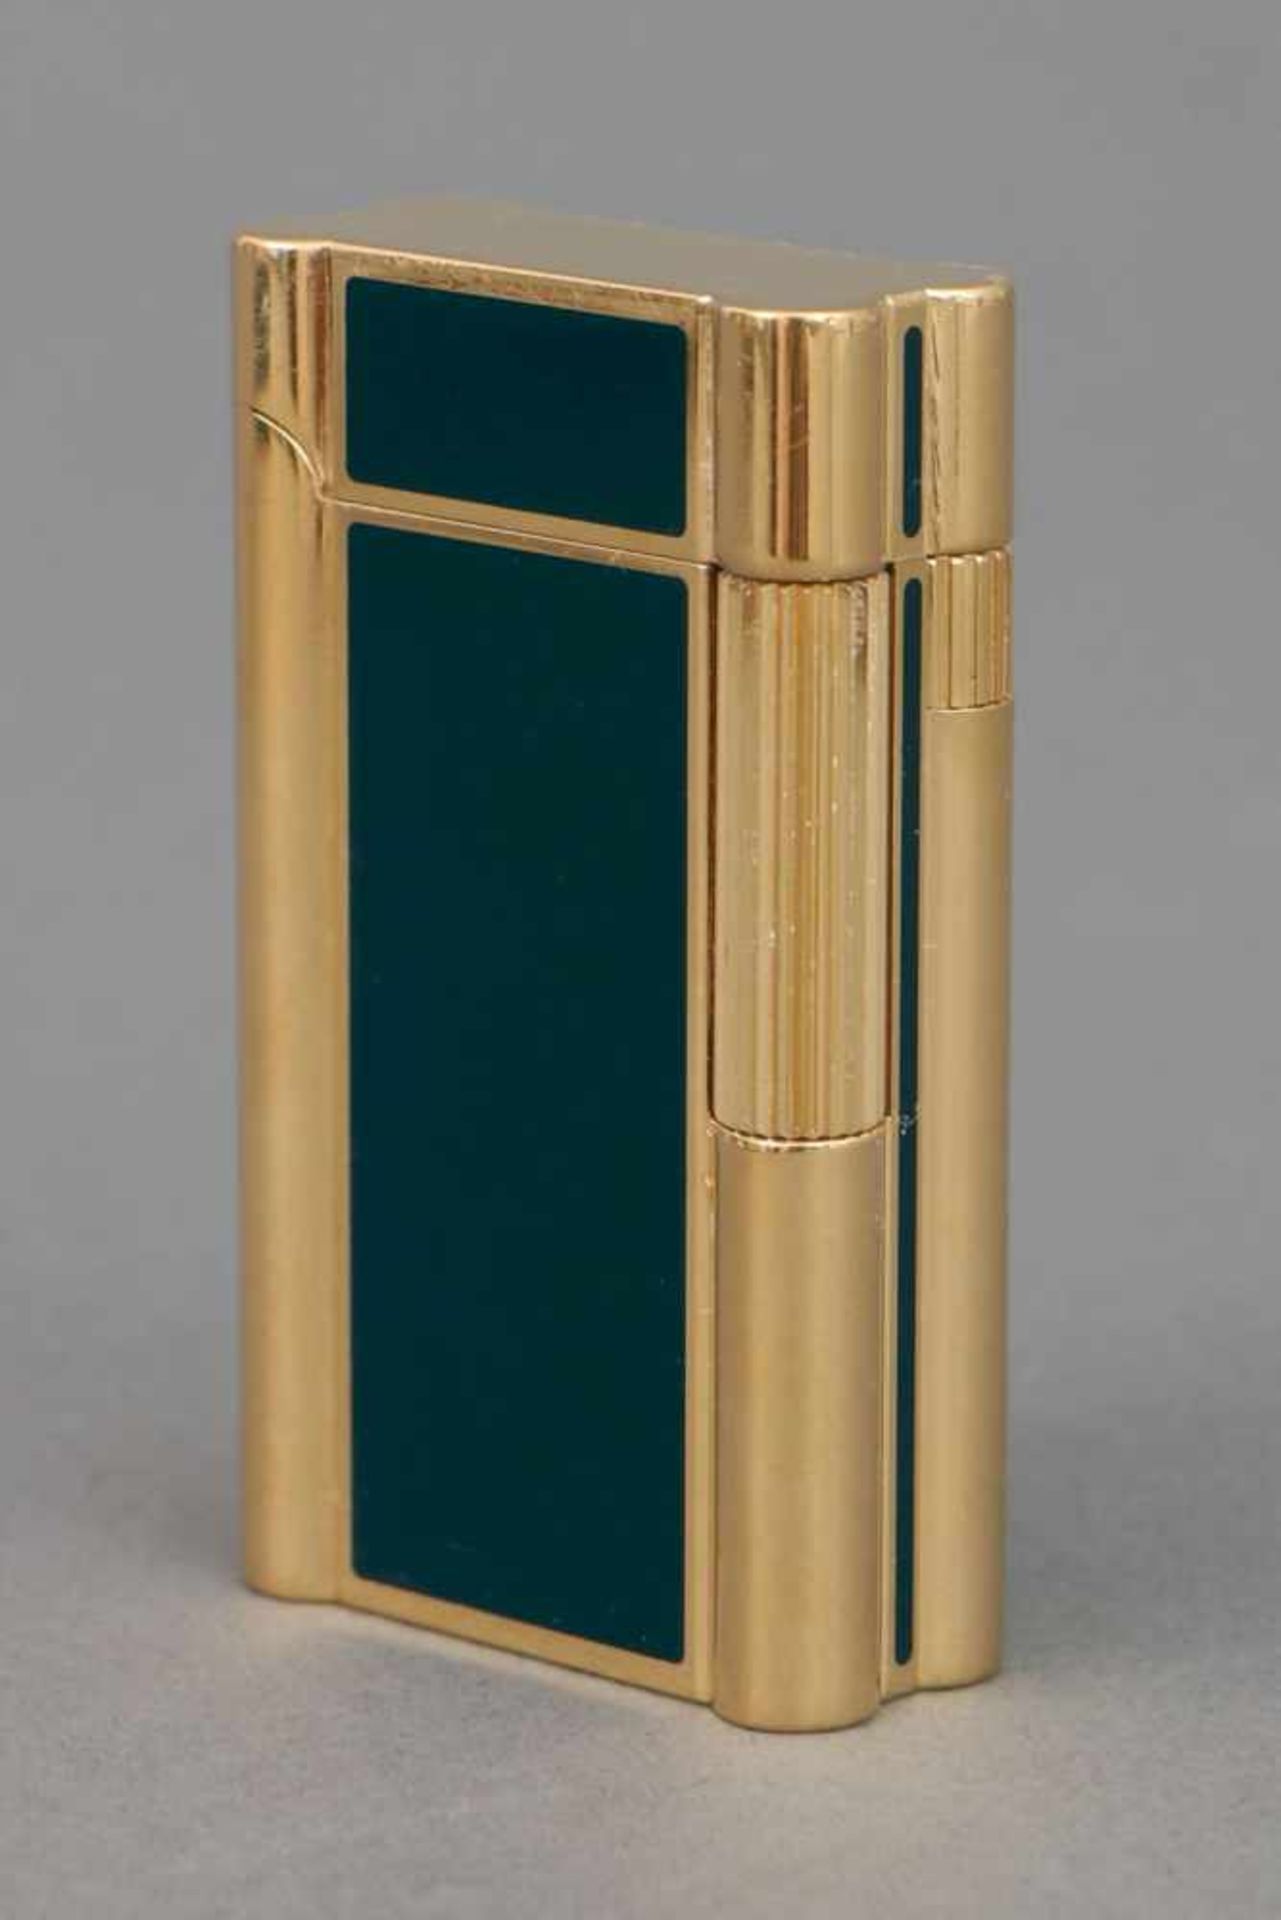 Rothschild Feuerzeugvergoldetes Metall und dunkler Chinalack, im original Etui (beledert),